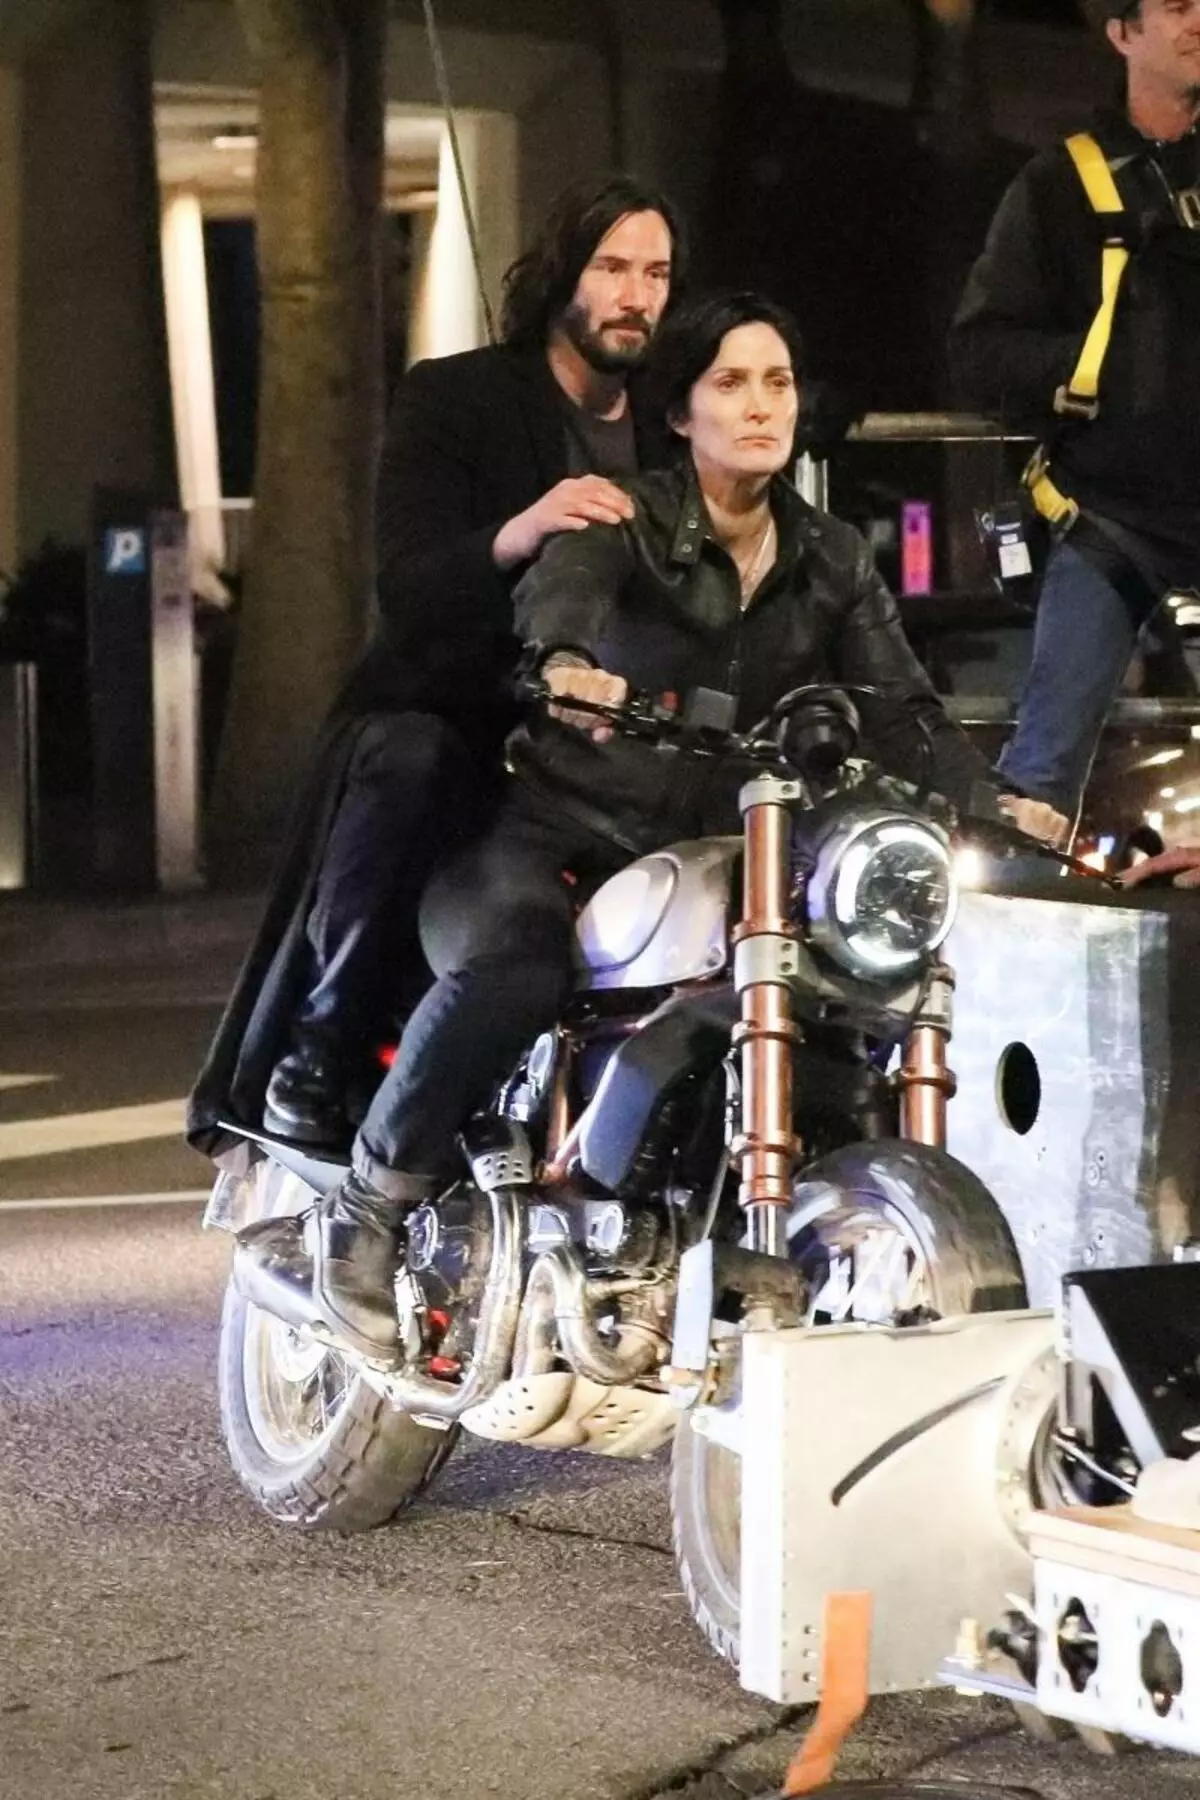 Foto: Keanu Reeves met geliefde Alexandra Grant op de set 